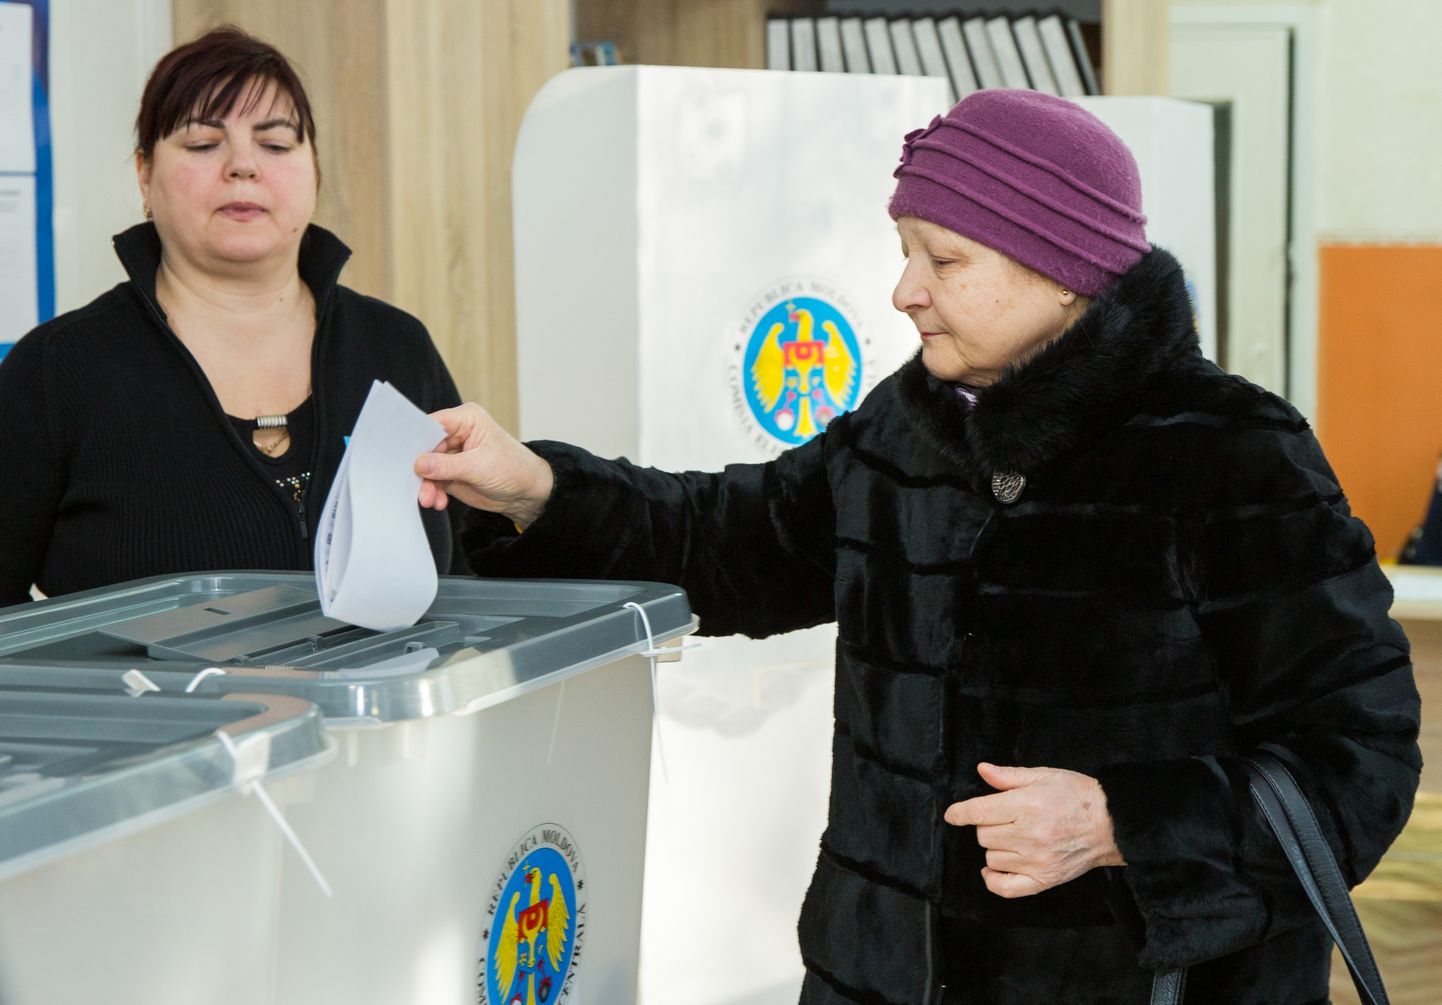 Naine hääletamas Moldova pealinnas Chișinăus.